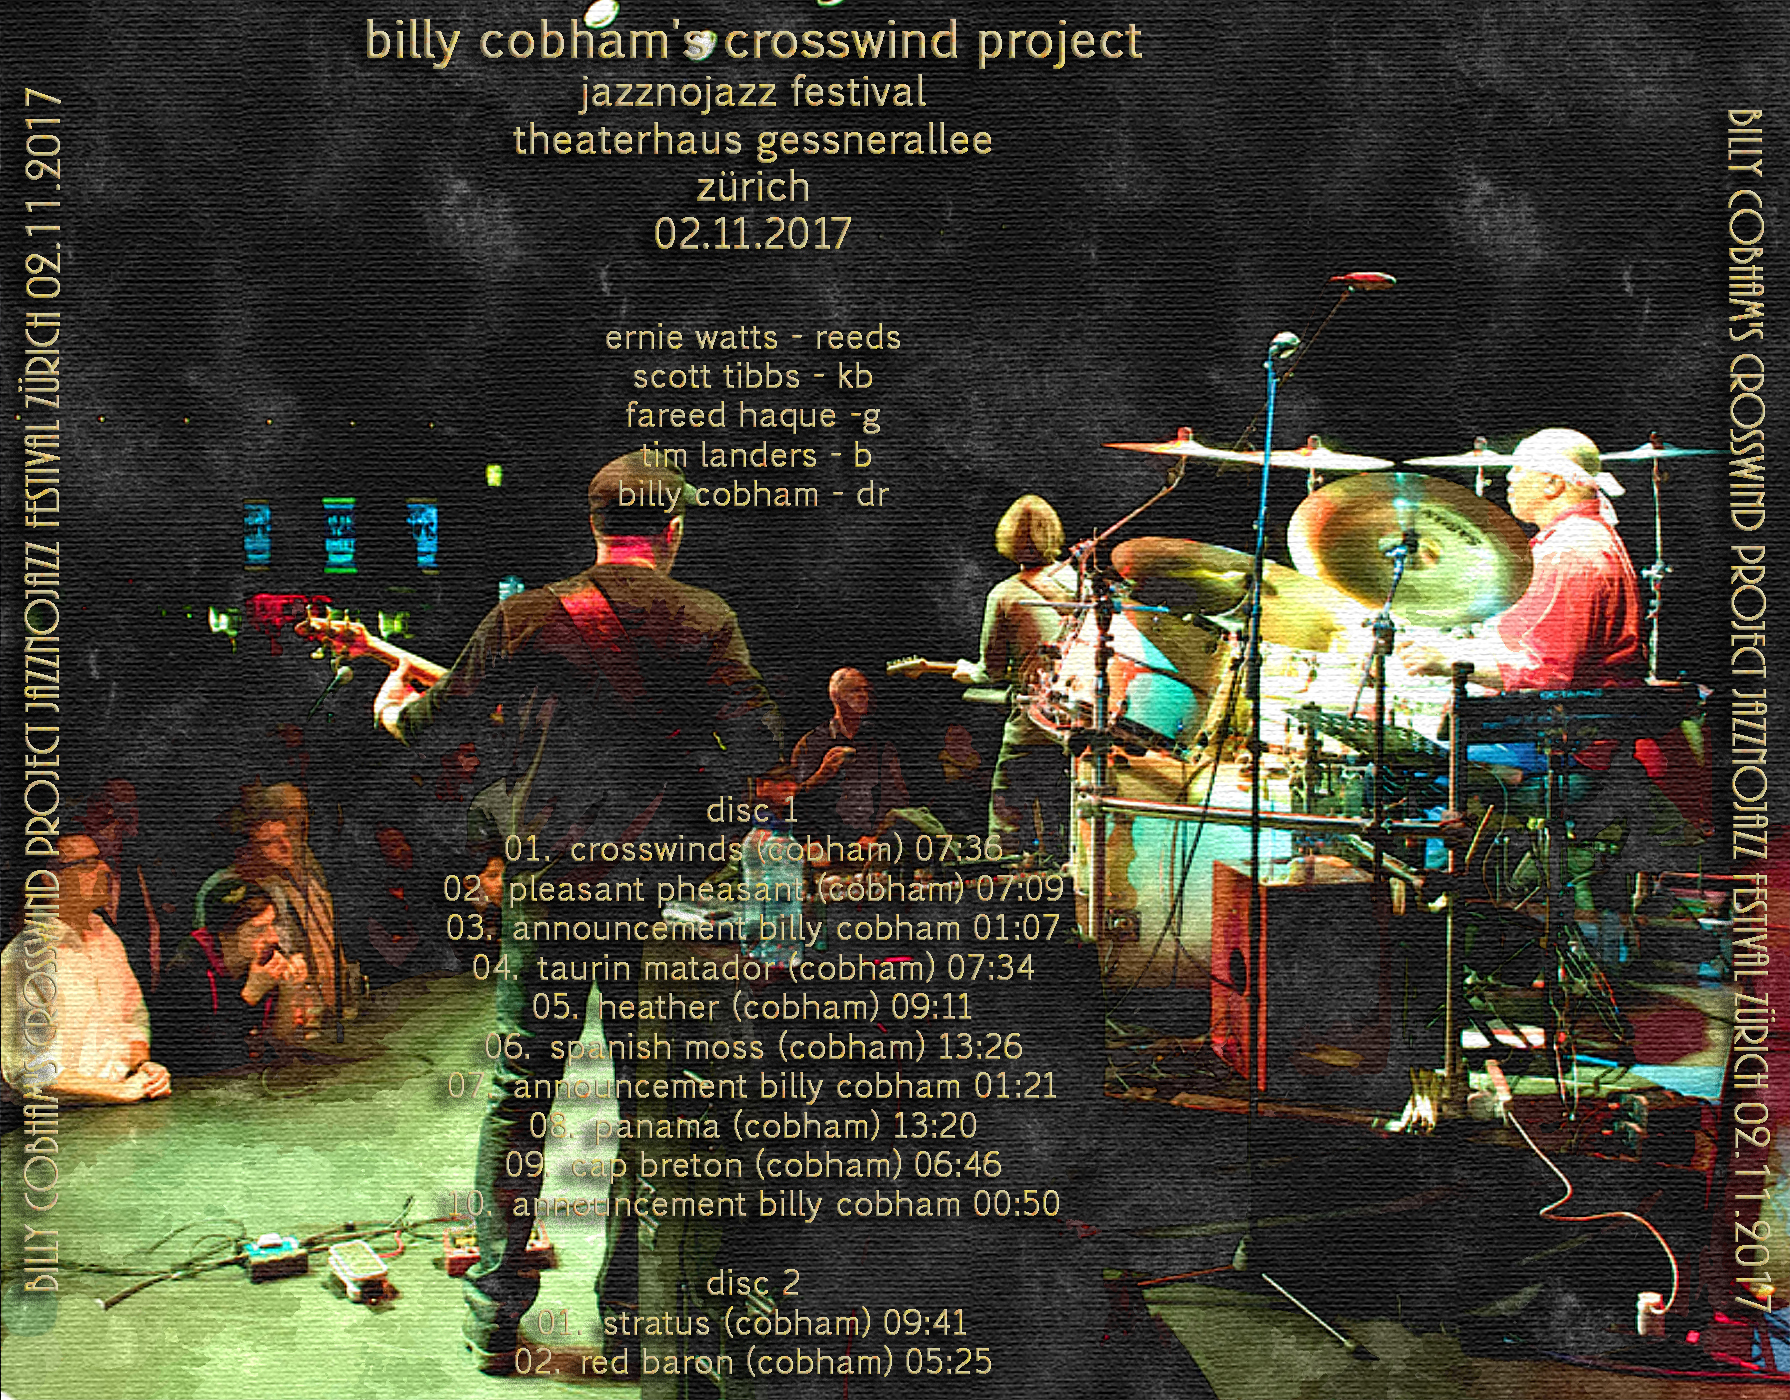 BillyCobhamsCrosswindProject2017-11-02TheaterhausGessneralleeZurichSwitzerland (1).jpg